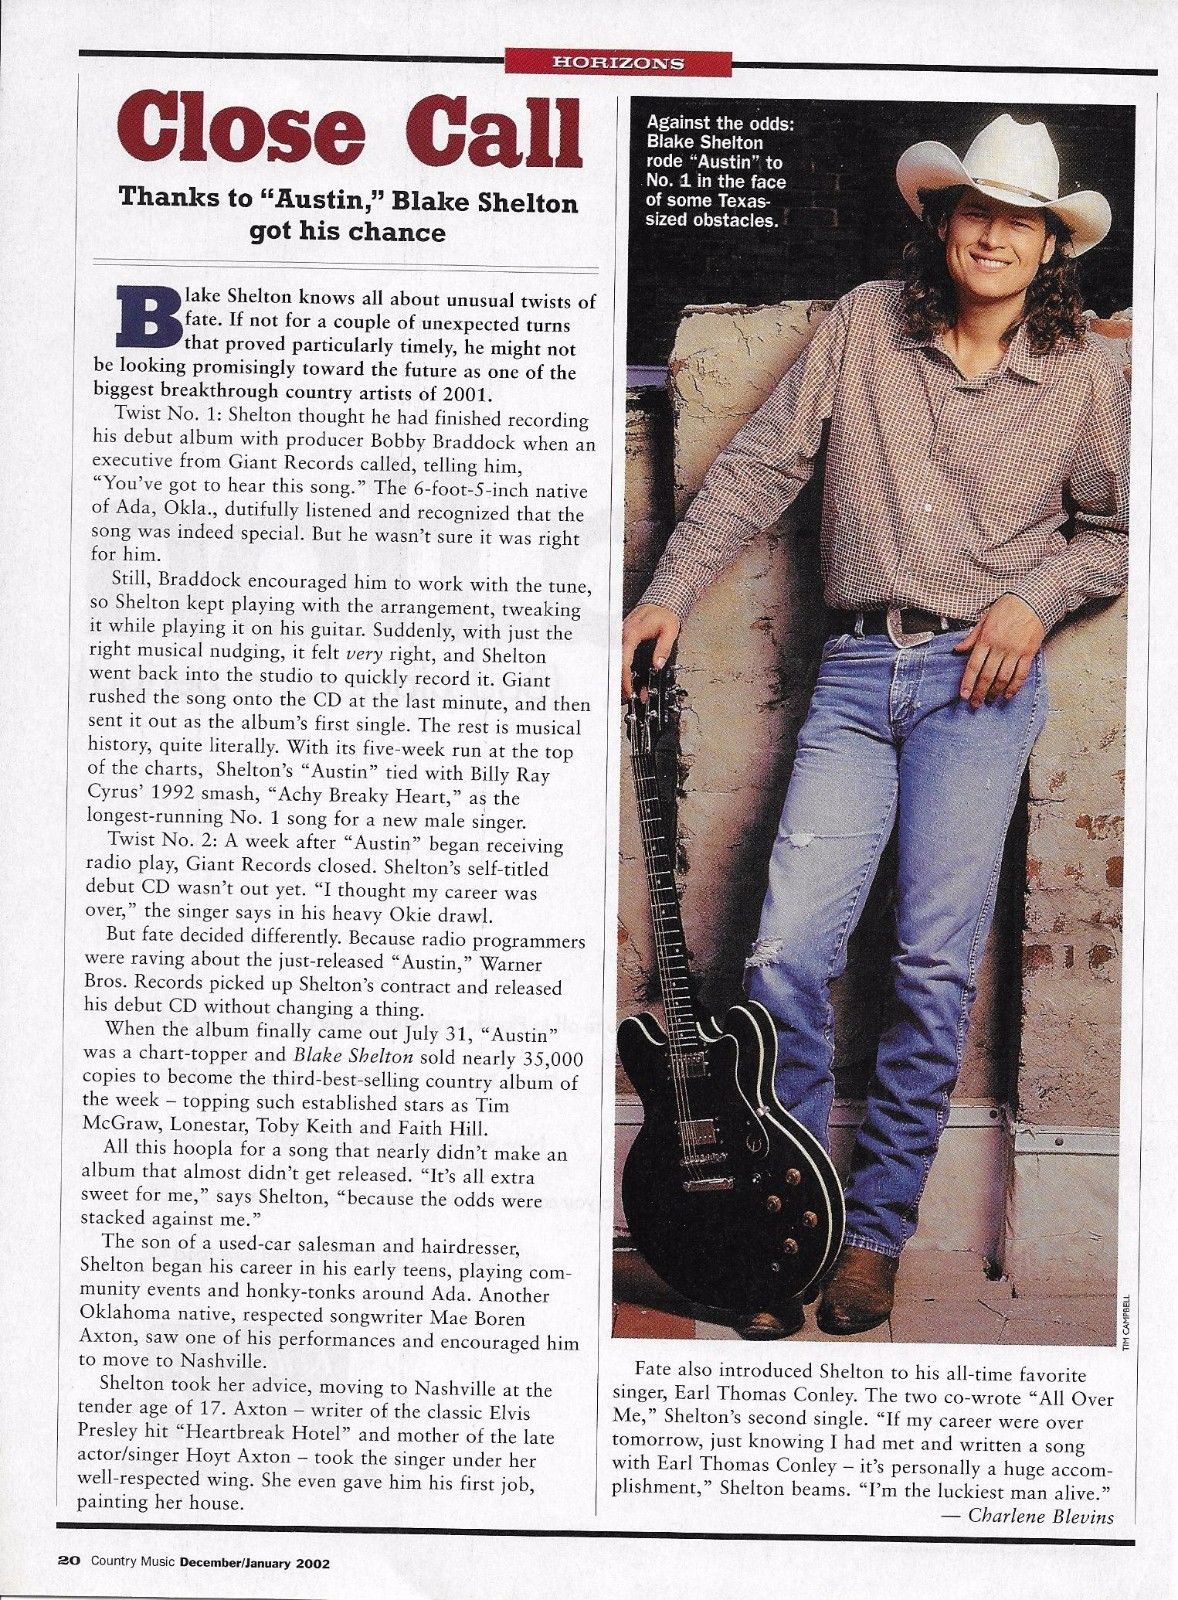 Country Music - Dec. 2001/Jan. 2002